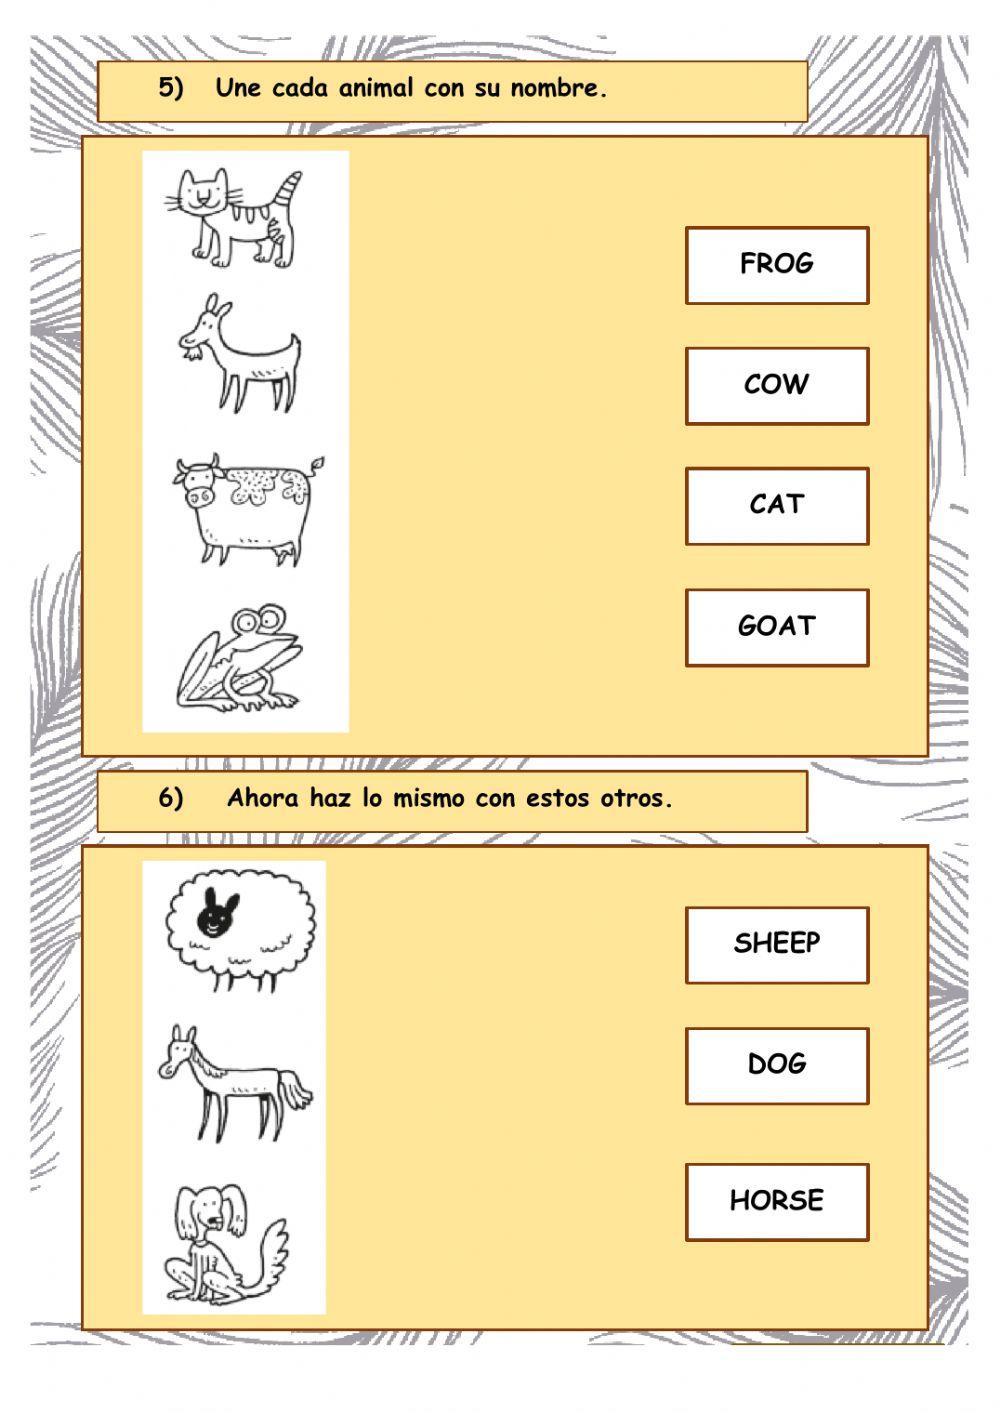 Farm animals and descriptions